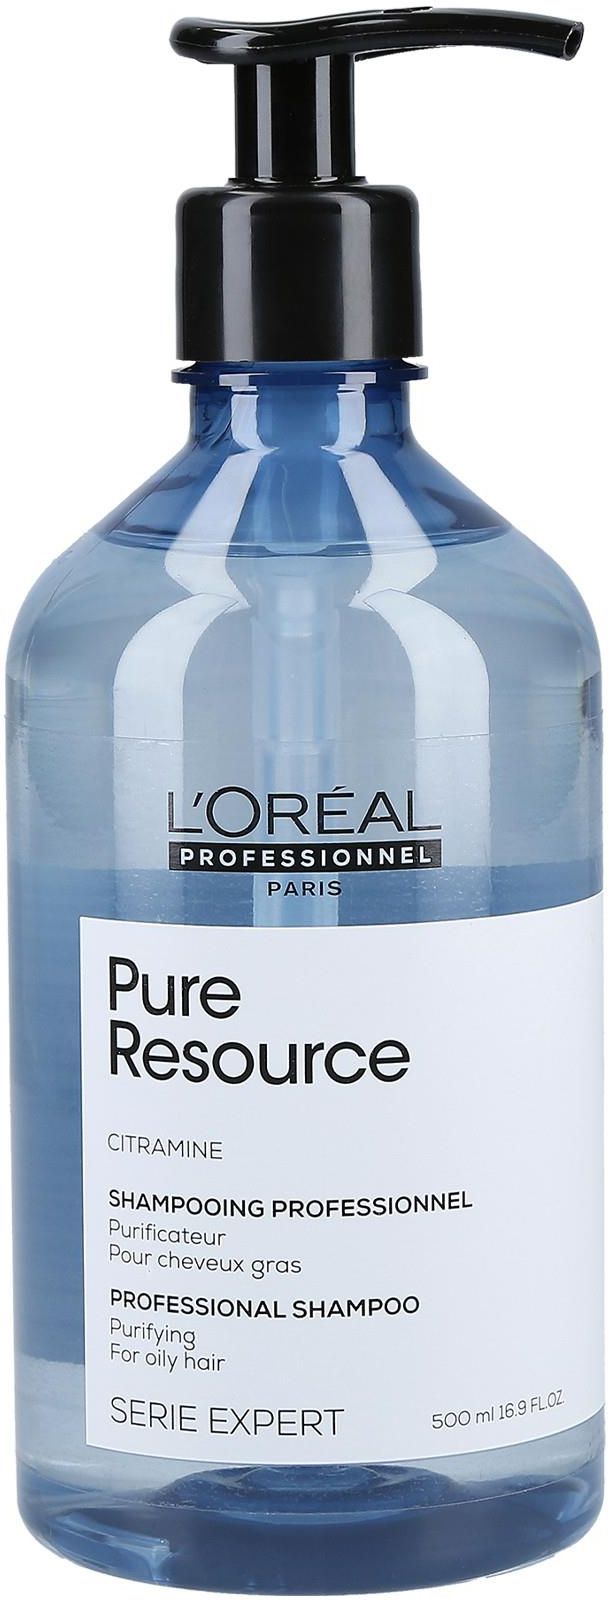 loreal pure resource szampon wizaz